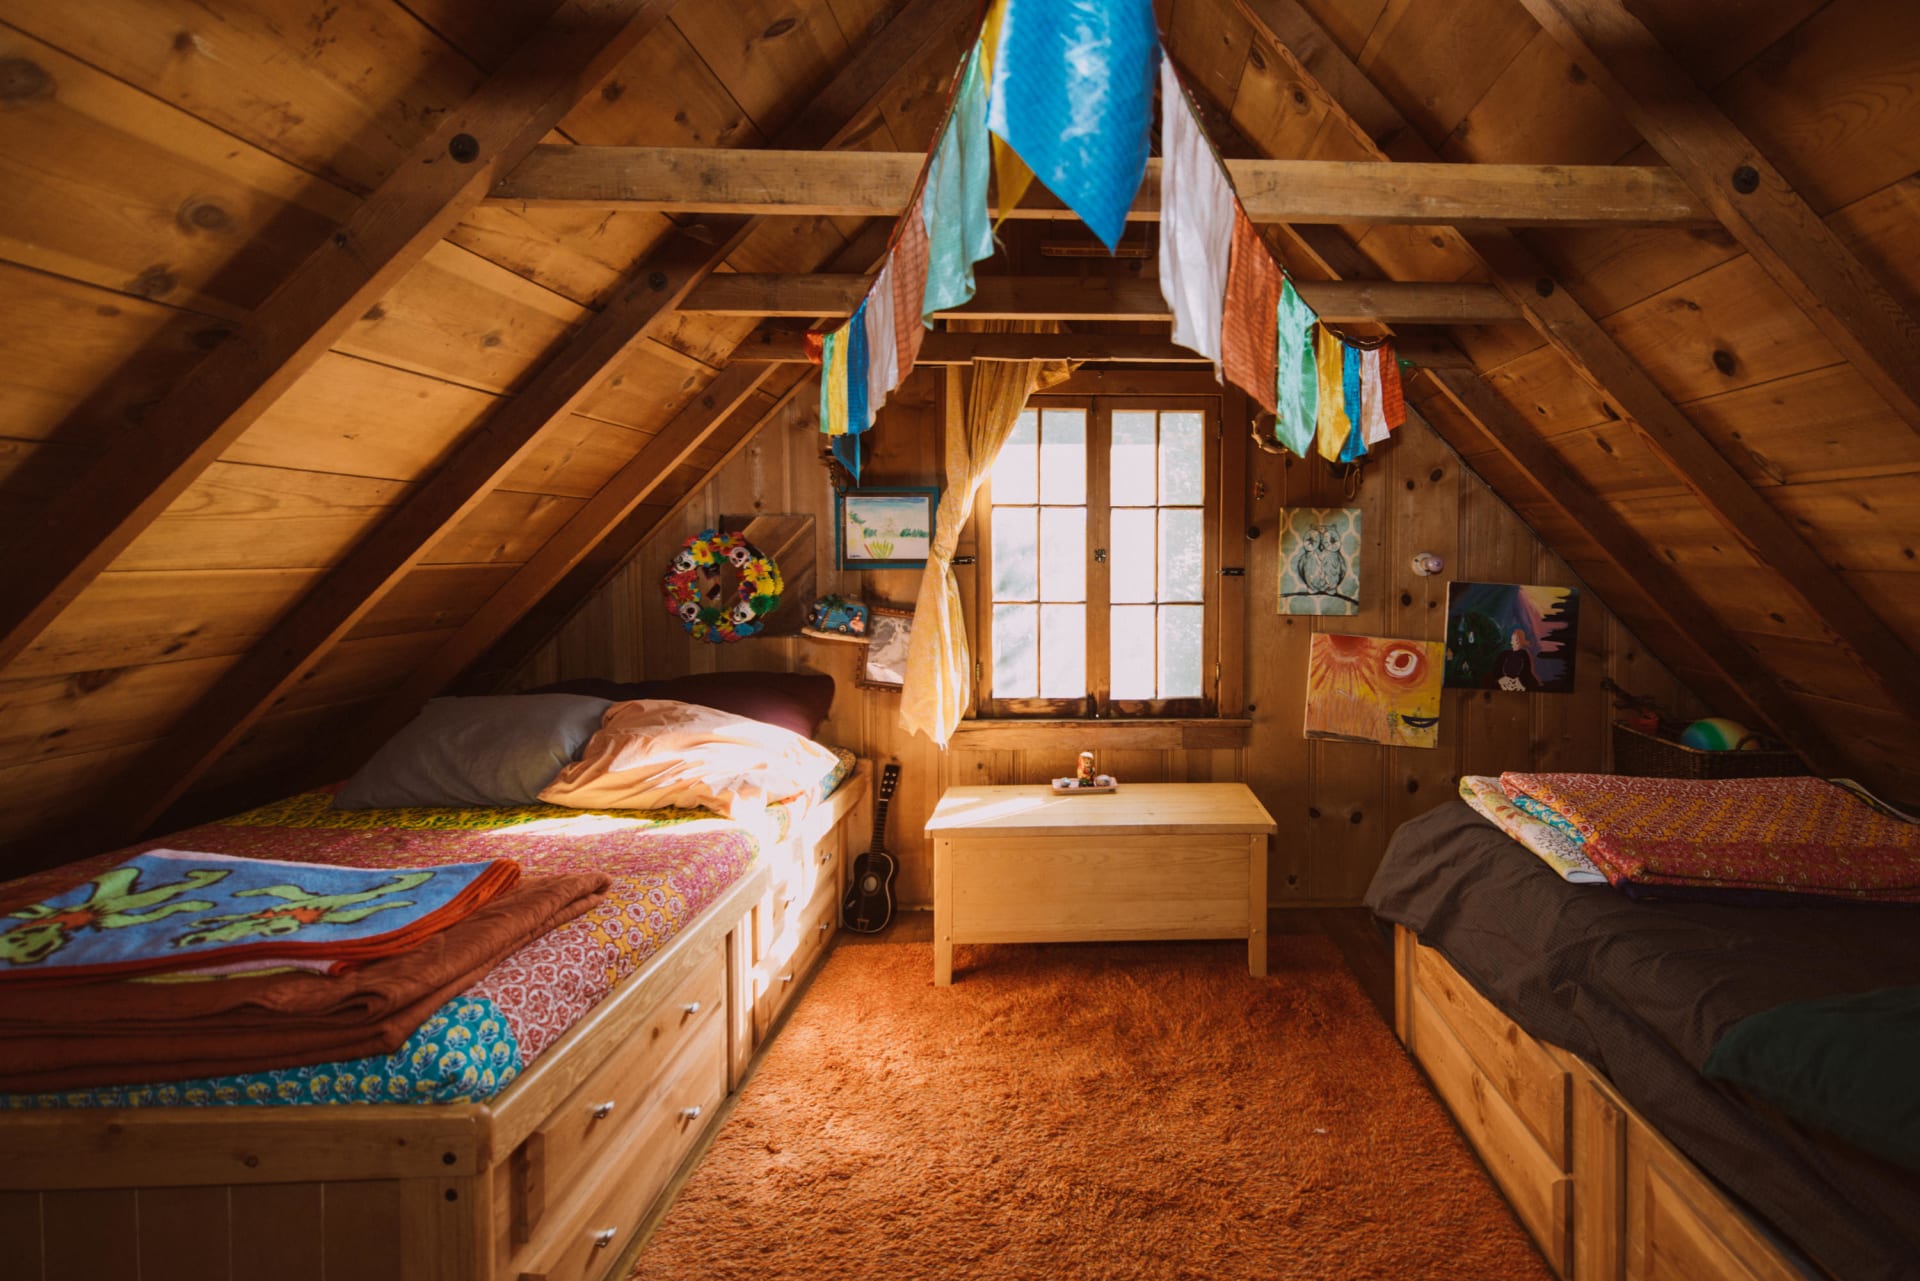 Sleeping loft has 2 full-sized beds